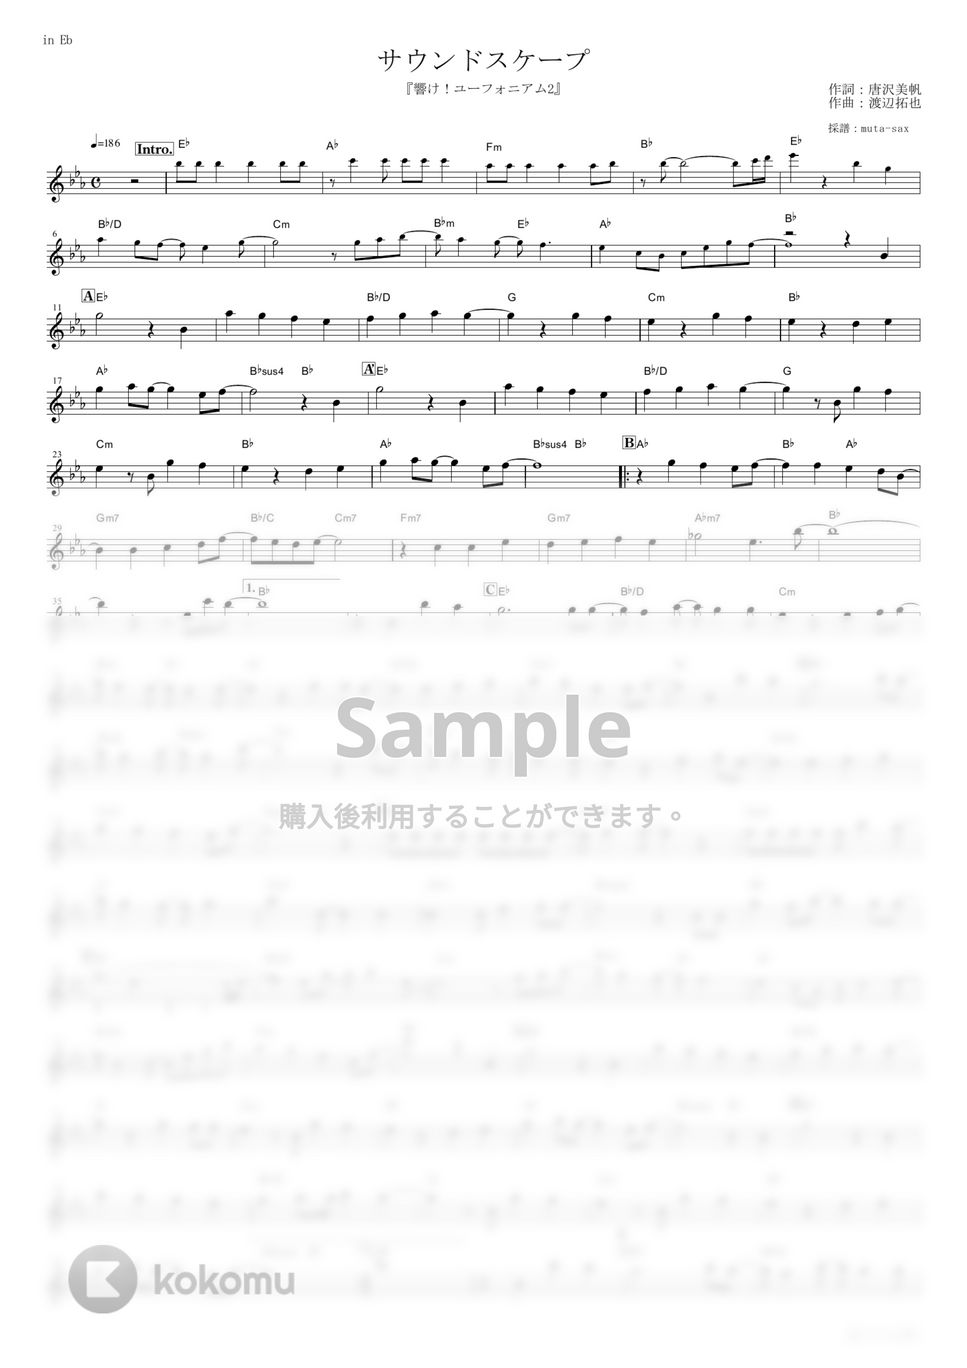 TRUE - サウンドスケープ (『響け！ユーフォニアム2』 / in Eb) by muta-sax